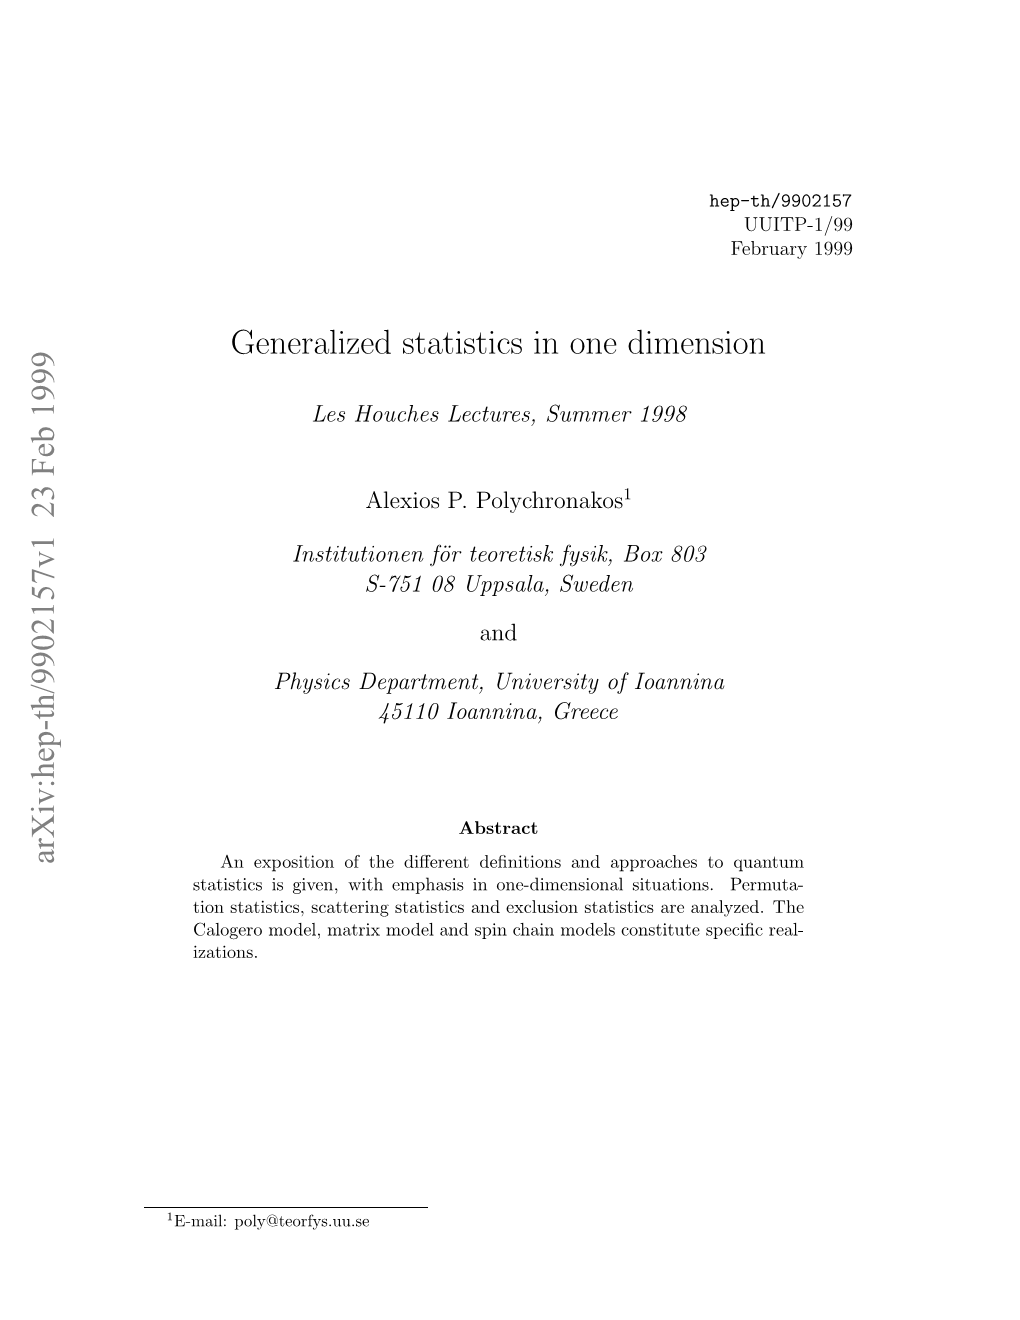 Generalized Statistics in One Dimension